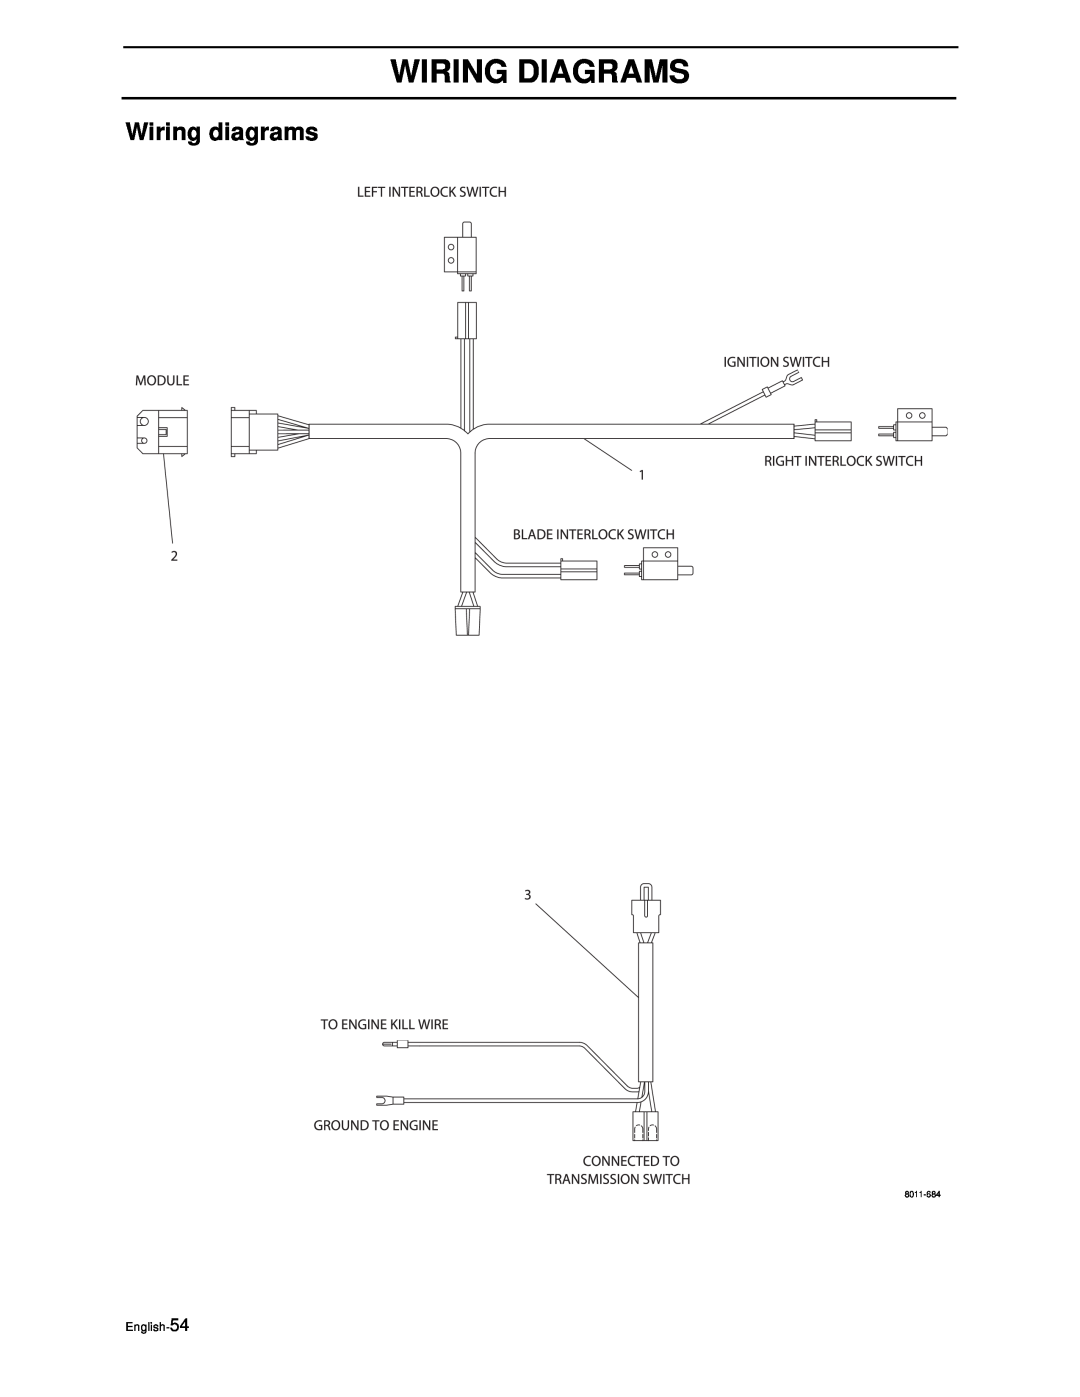 Husqvarna WG4815E, WG3613E manual Wiring Diagrams, Wiring diagrams, English-54, 8011-684 